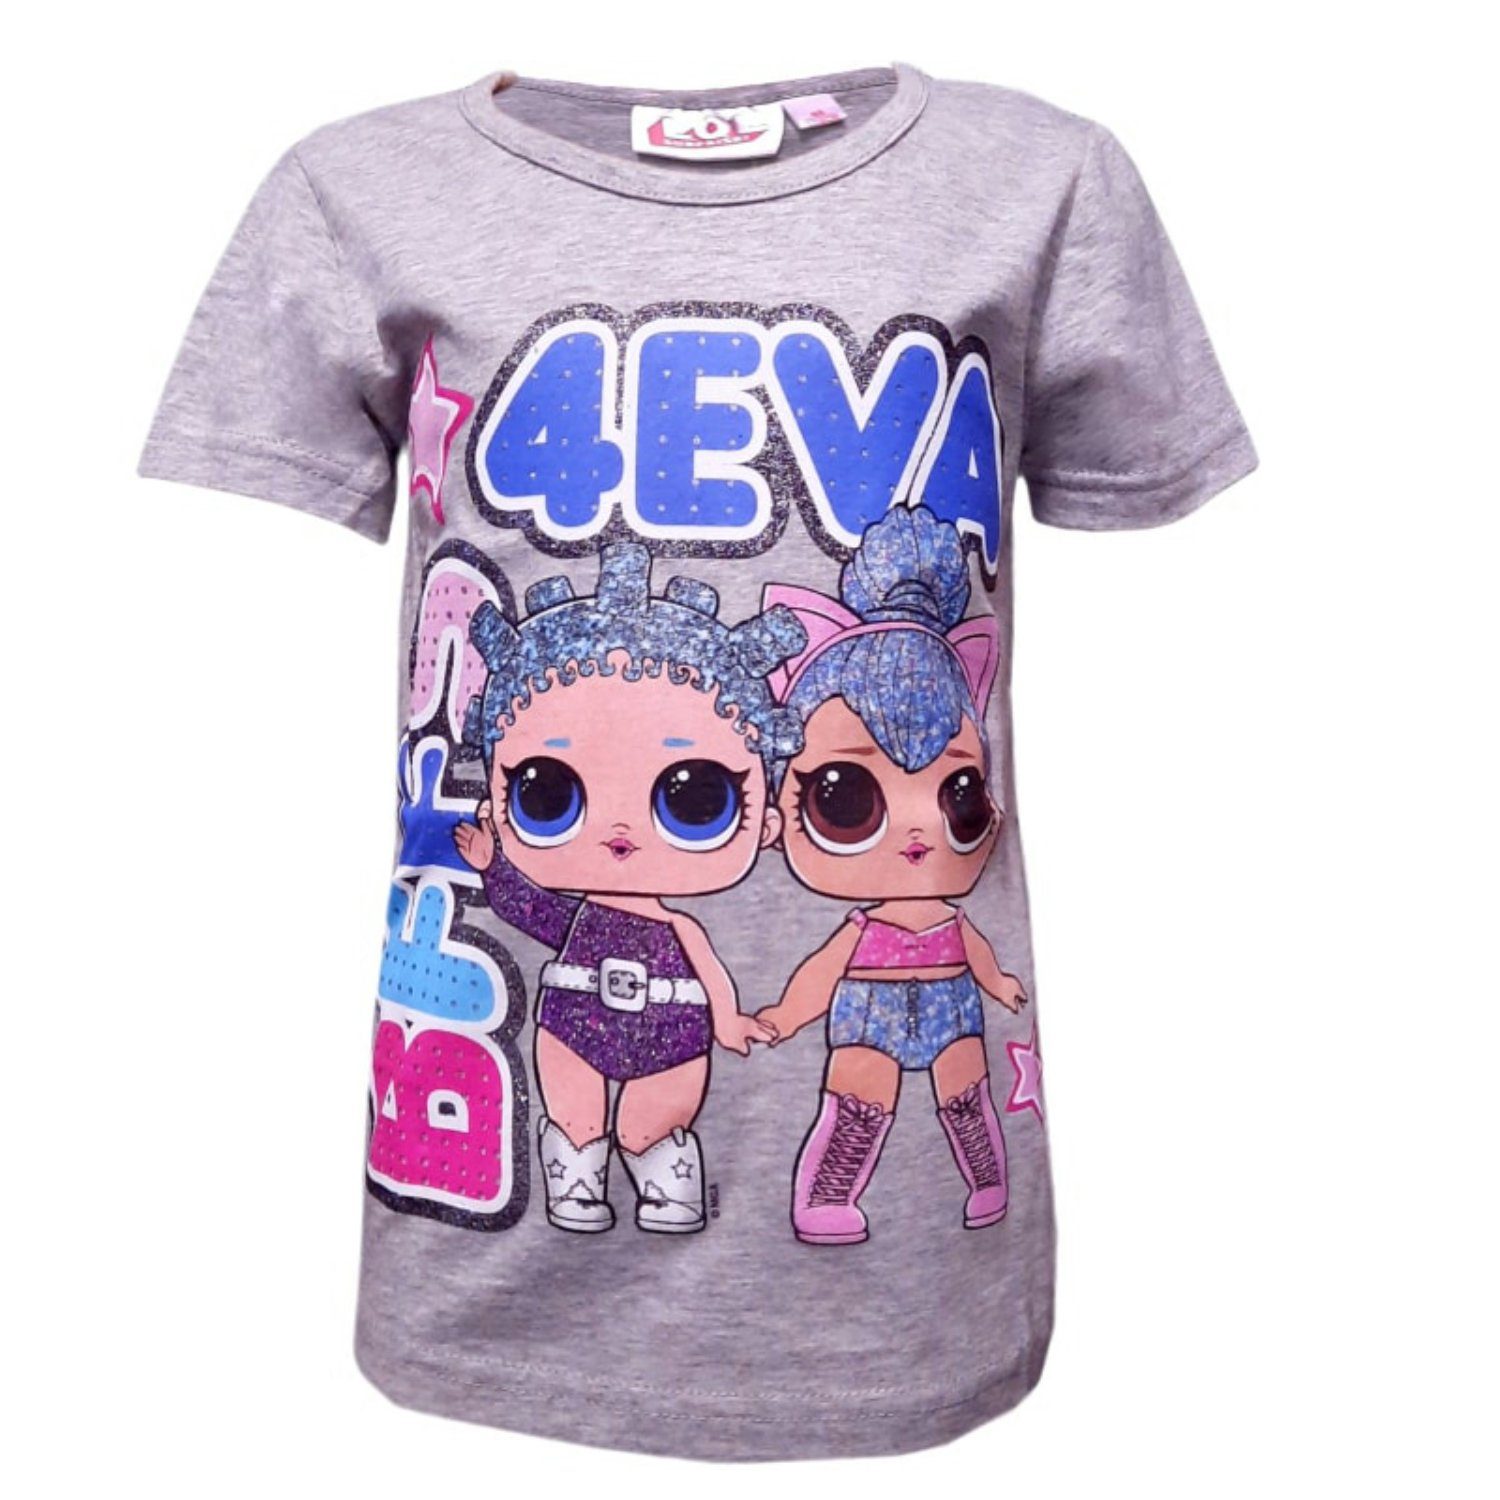 L.O.L. SURPRISE! Surprise Print-Shirt 100% T-Shirt Baumwolle 4EWA 116, Mädchen Grau Kinder LOL Gr